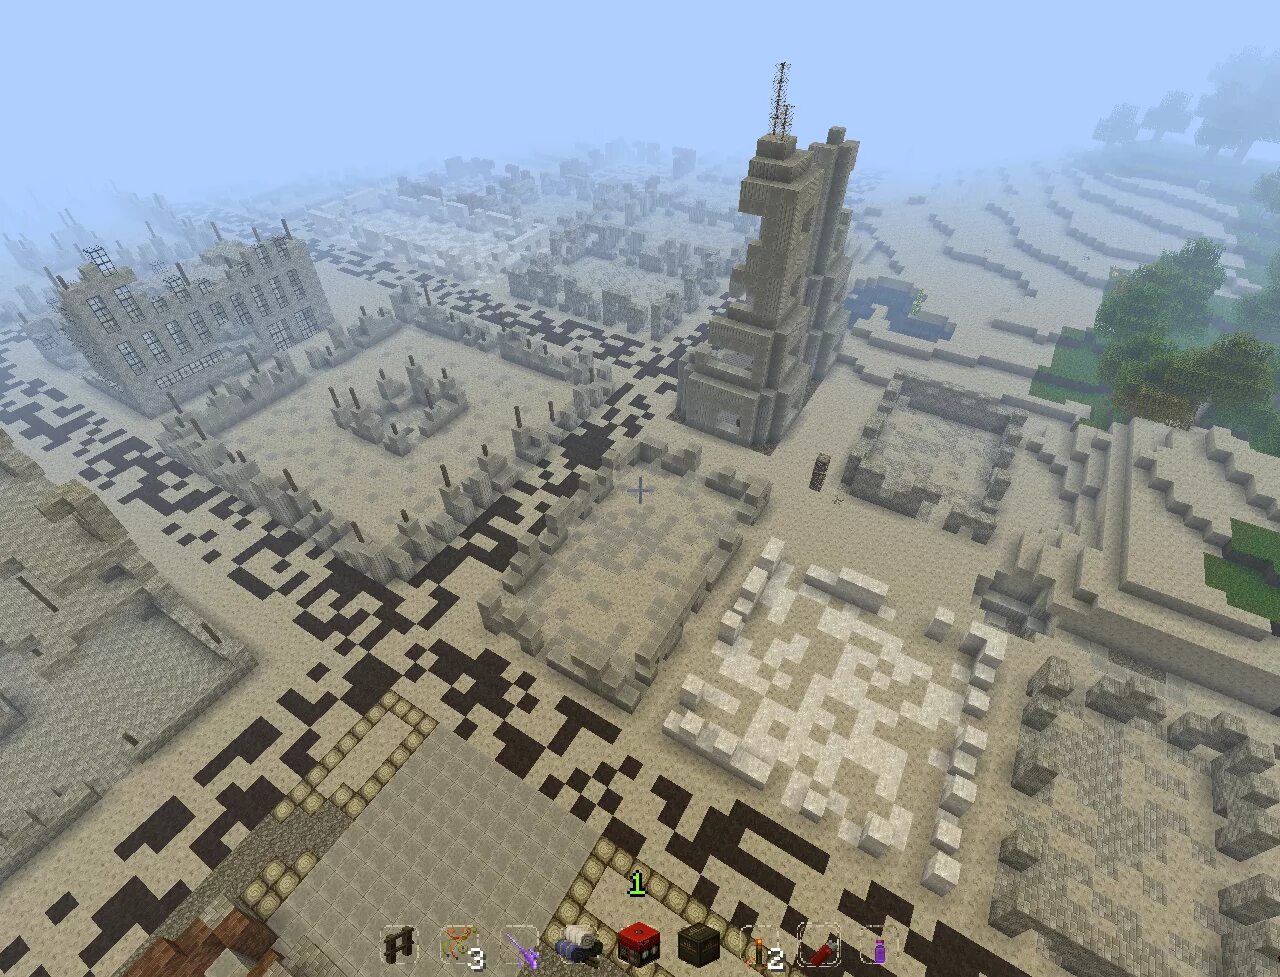 Apocalyptic City майнкрафт. Minecraft Apocalyptic City карта. Майнкрафт ядерный апокалипсис город. Постапокалипсис майнкрафт. Майнкрафт мод 10 апокалипсисов